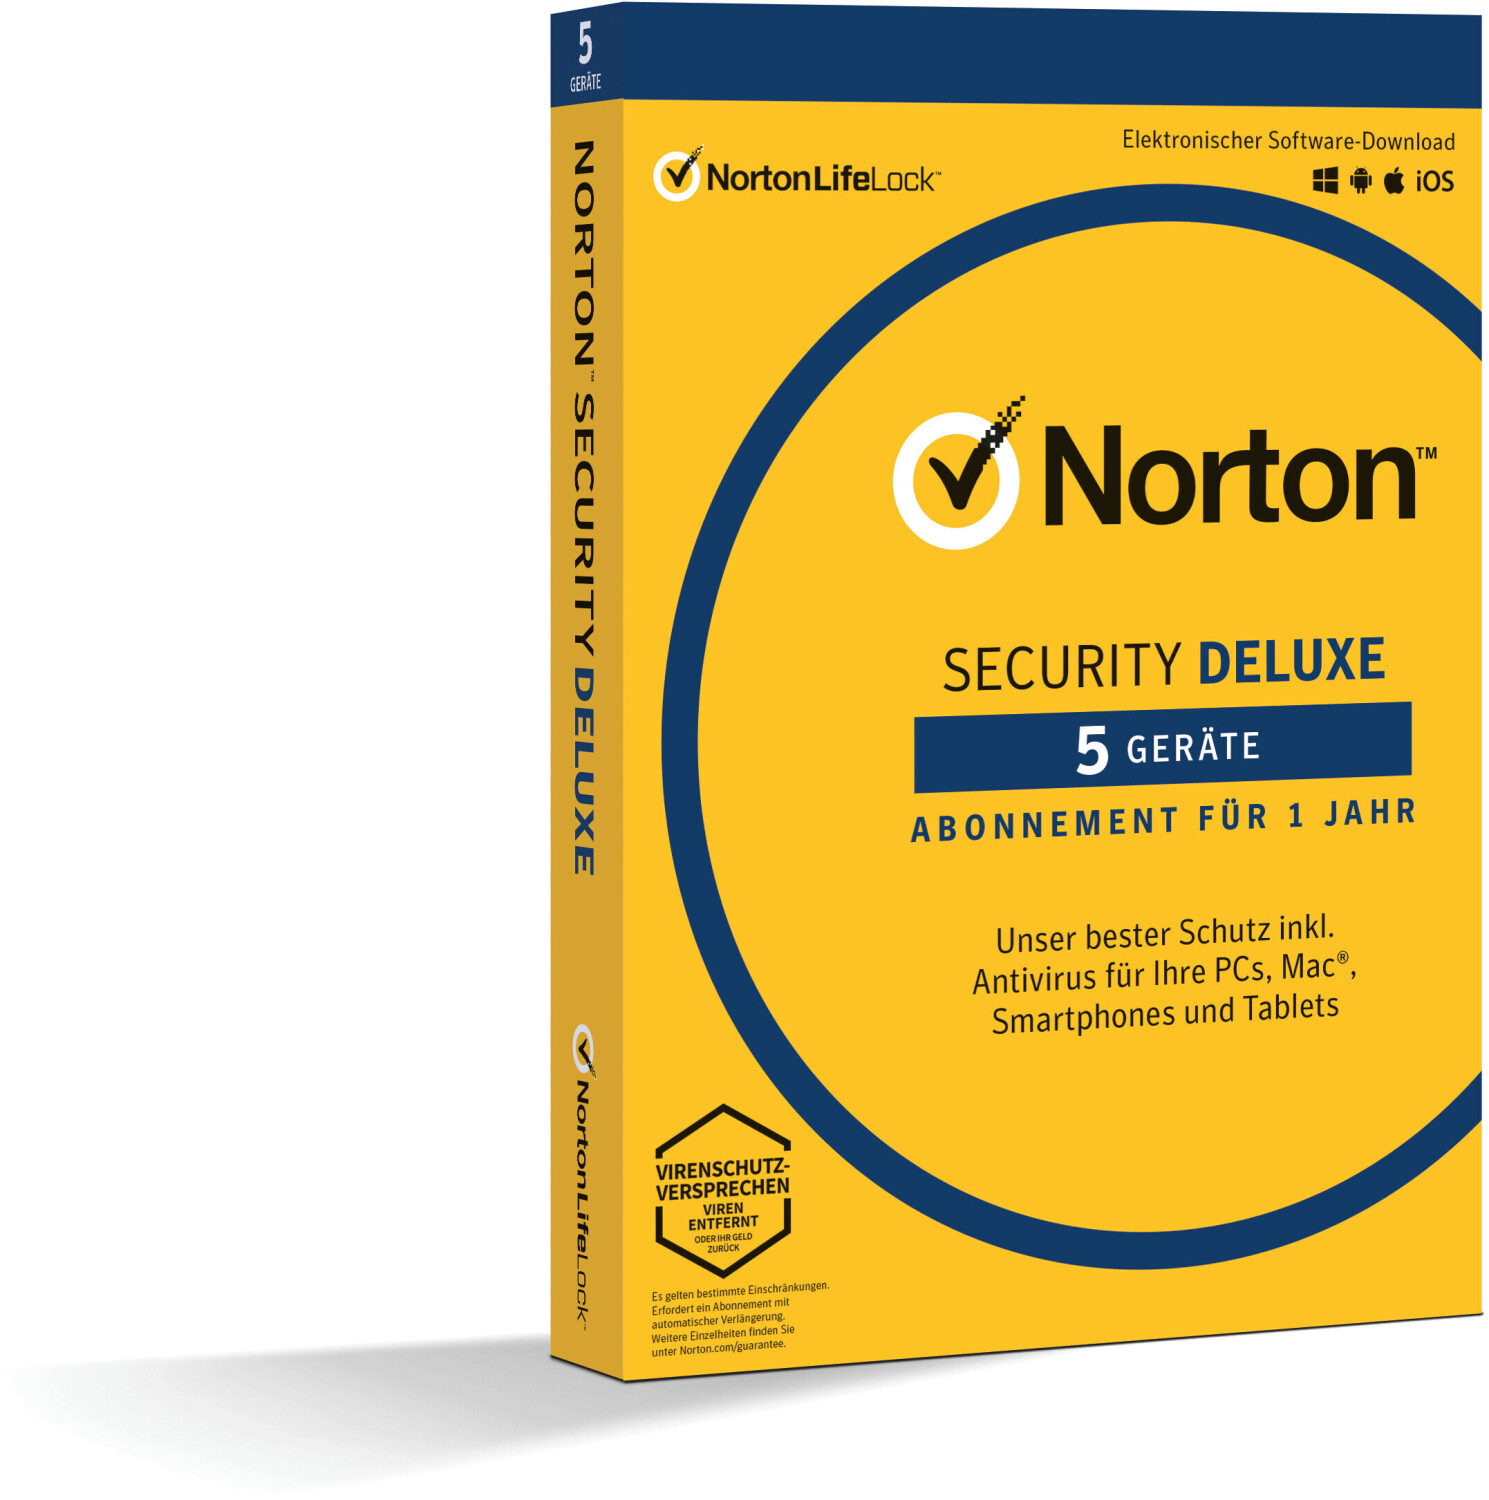 norton security cost